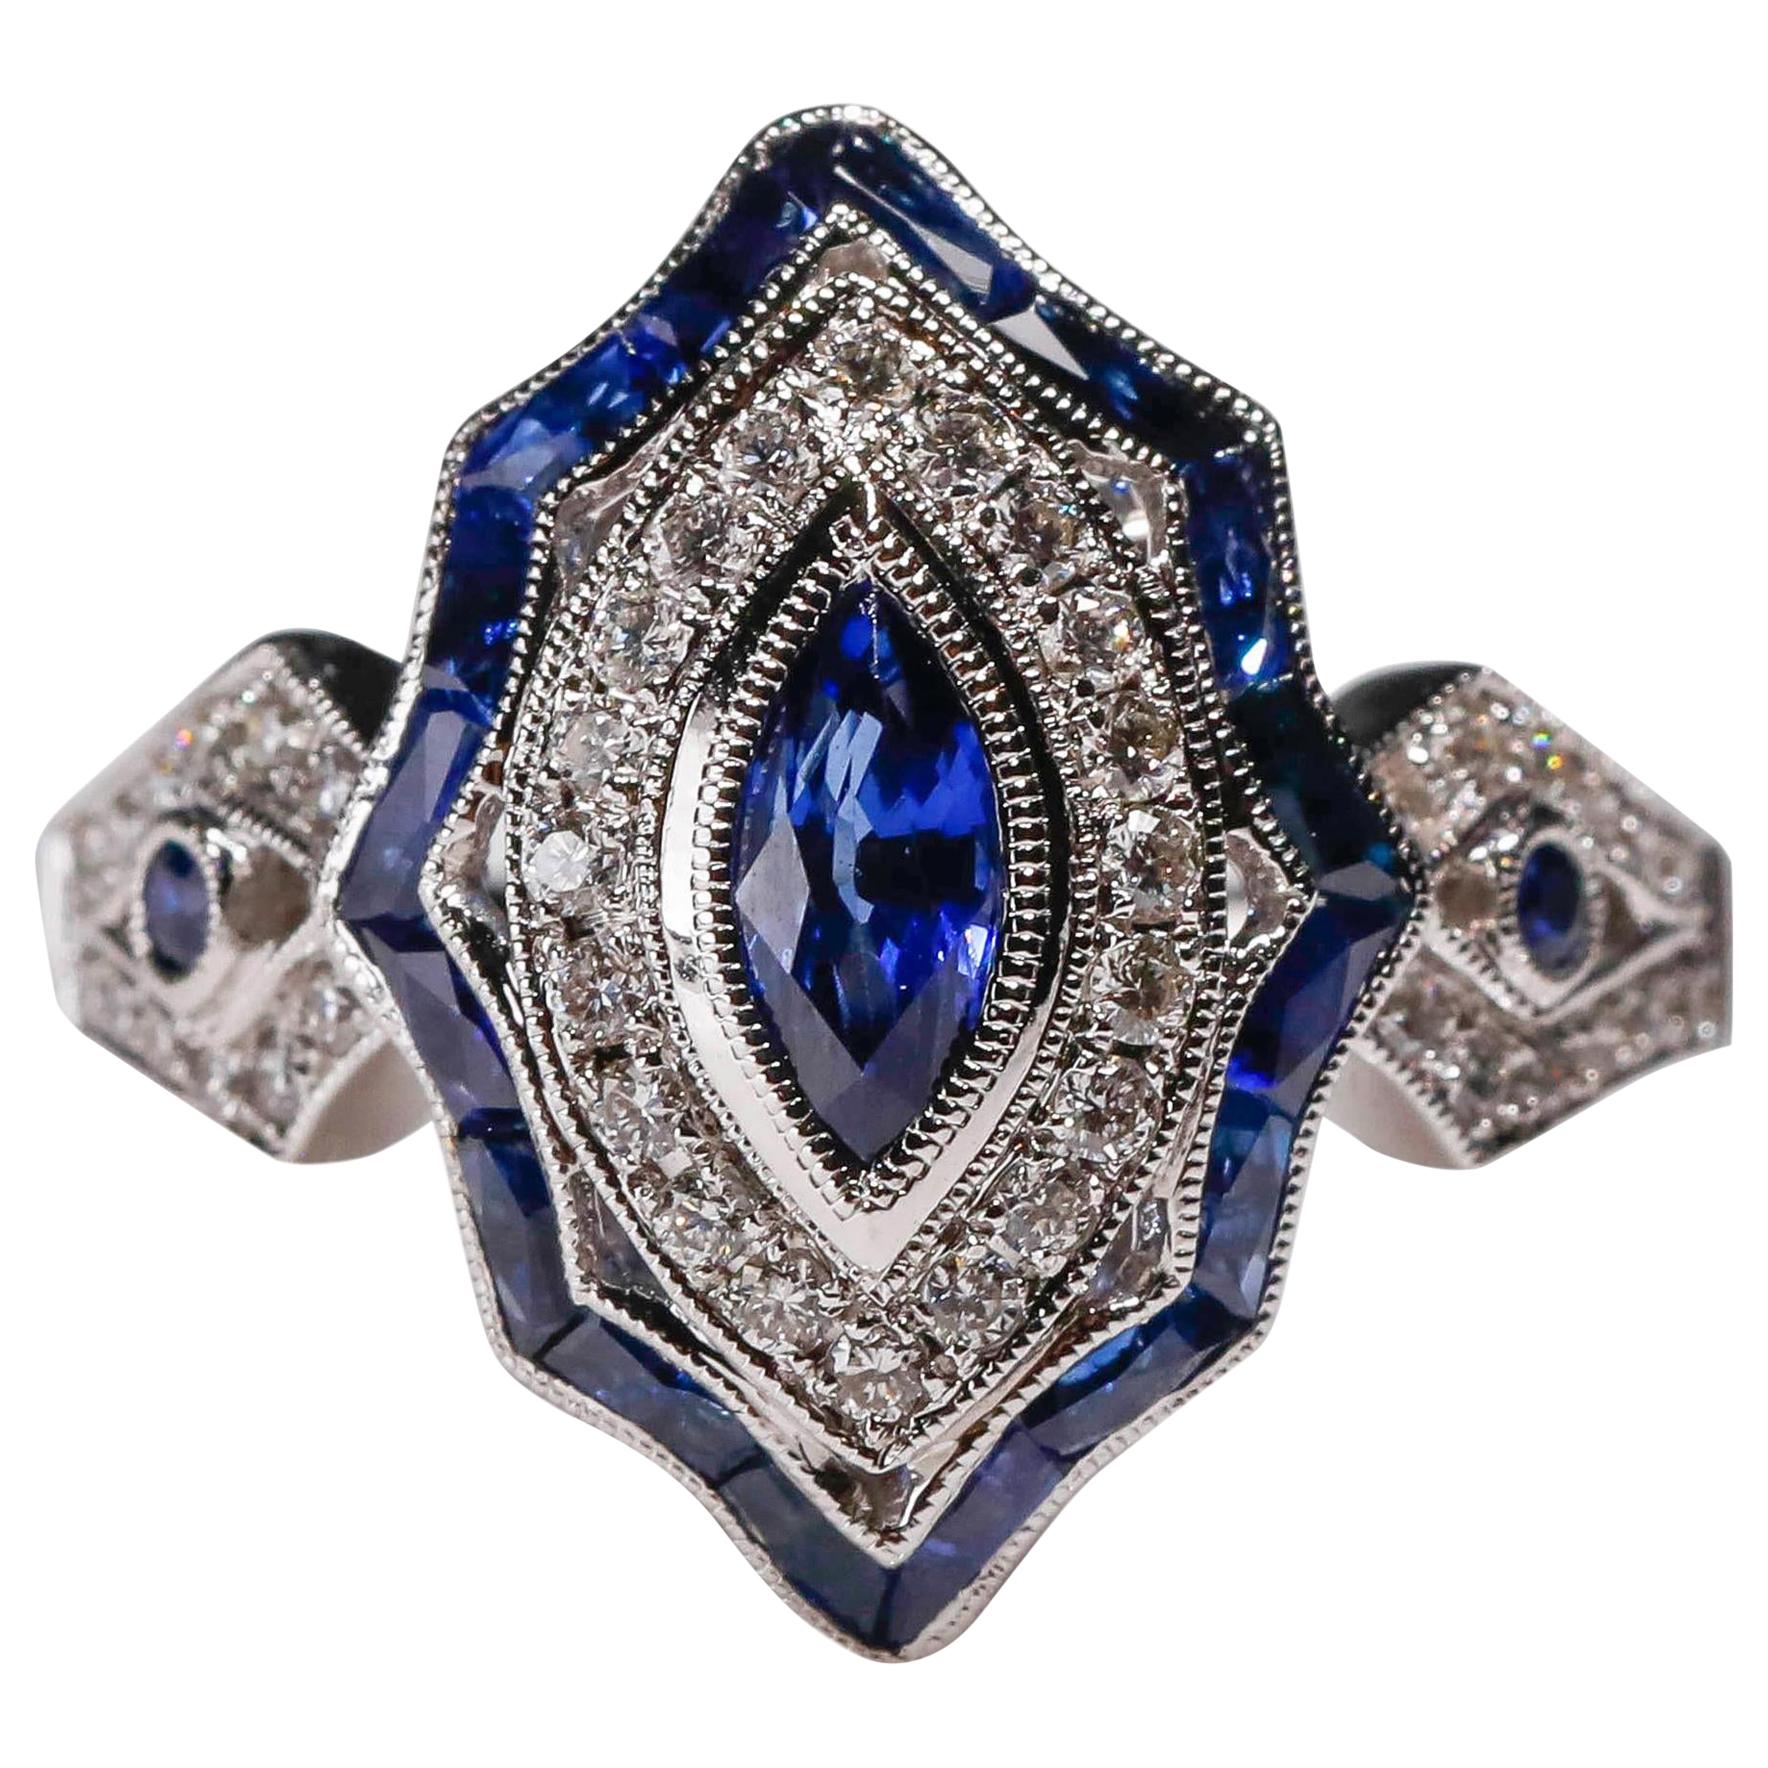 1.4 Carat Marquise Cut Blue Sapphire Diamond Engagement Ring 18 Karat White Gold